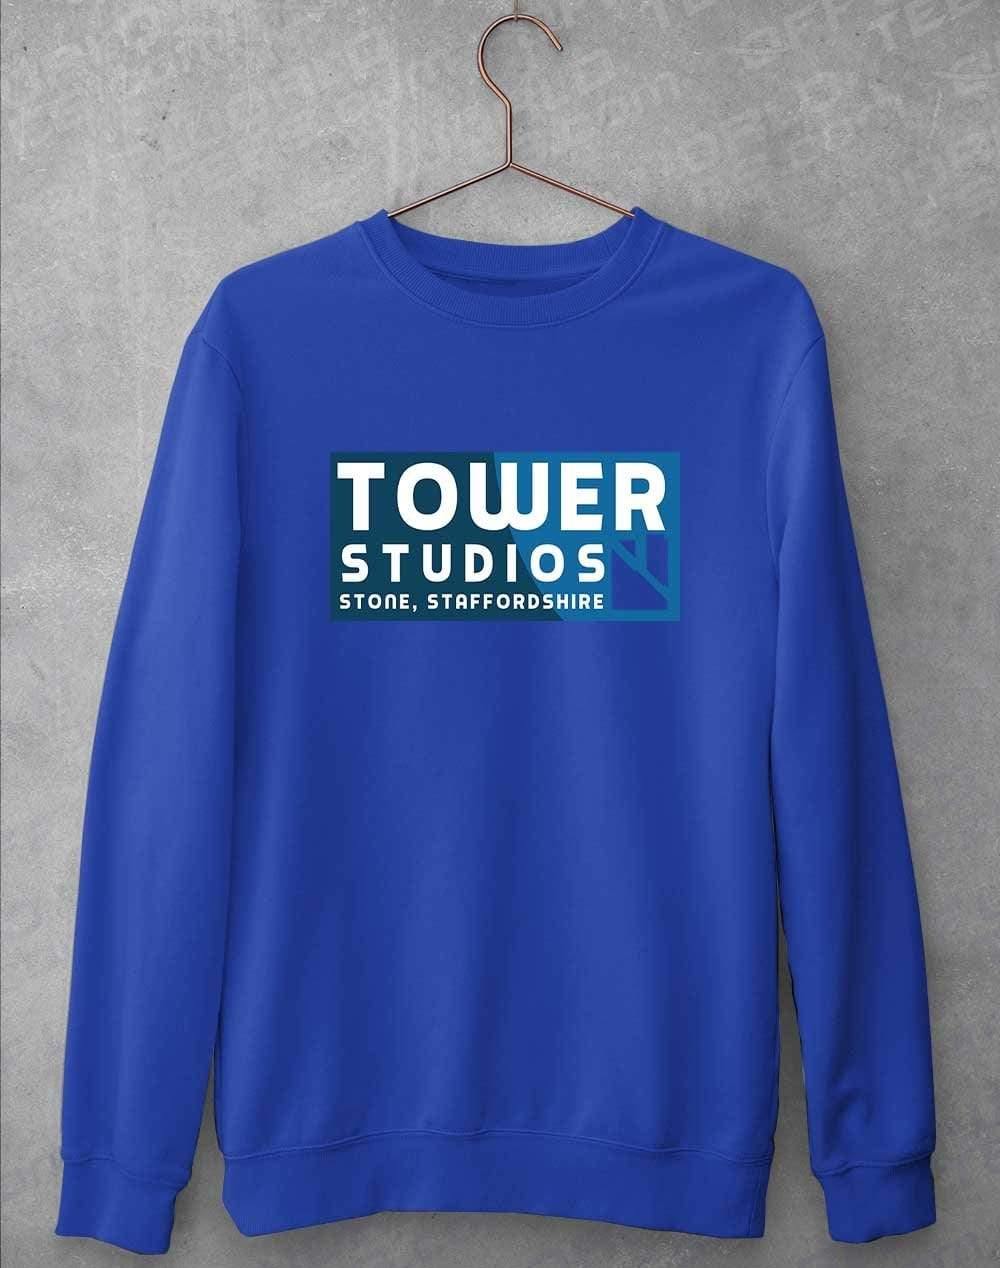 Tower Studios Cut Out Logo Sweatshirt S / Royal Blue  - Off World Tees